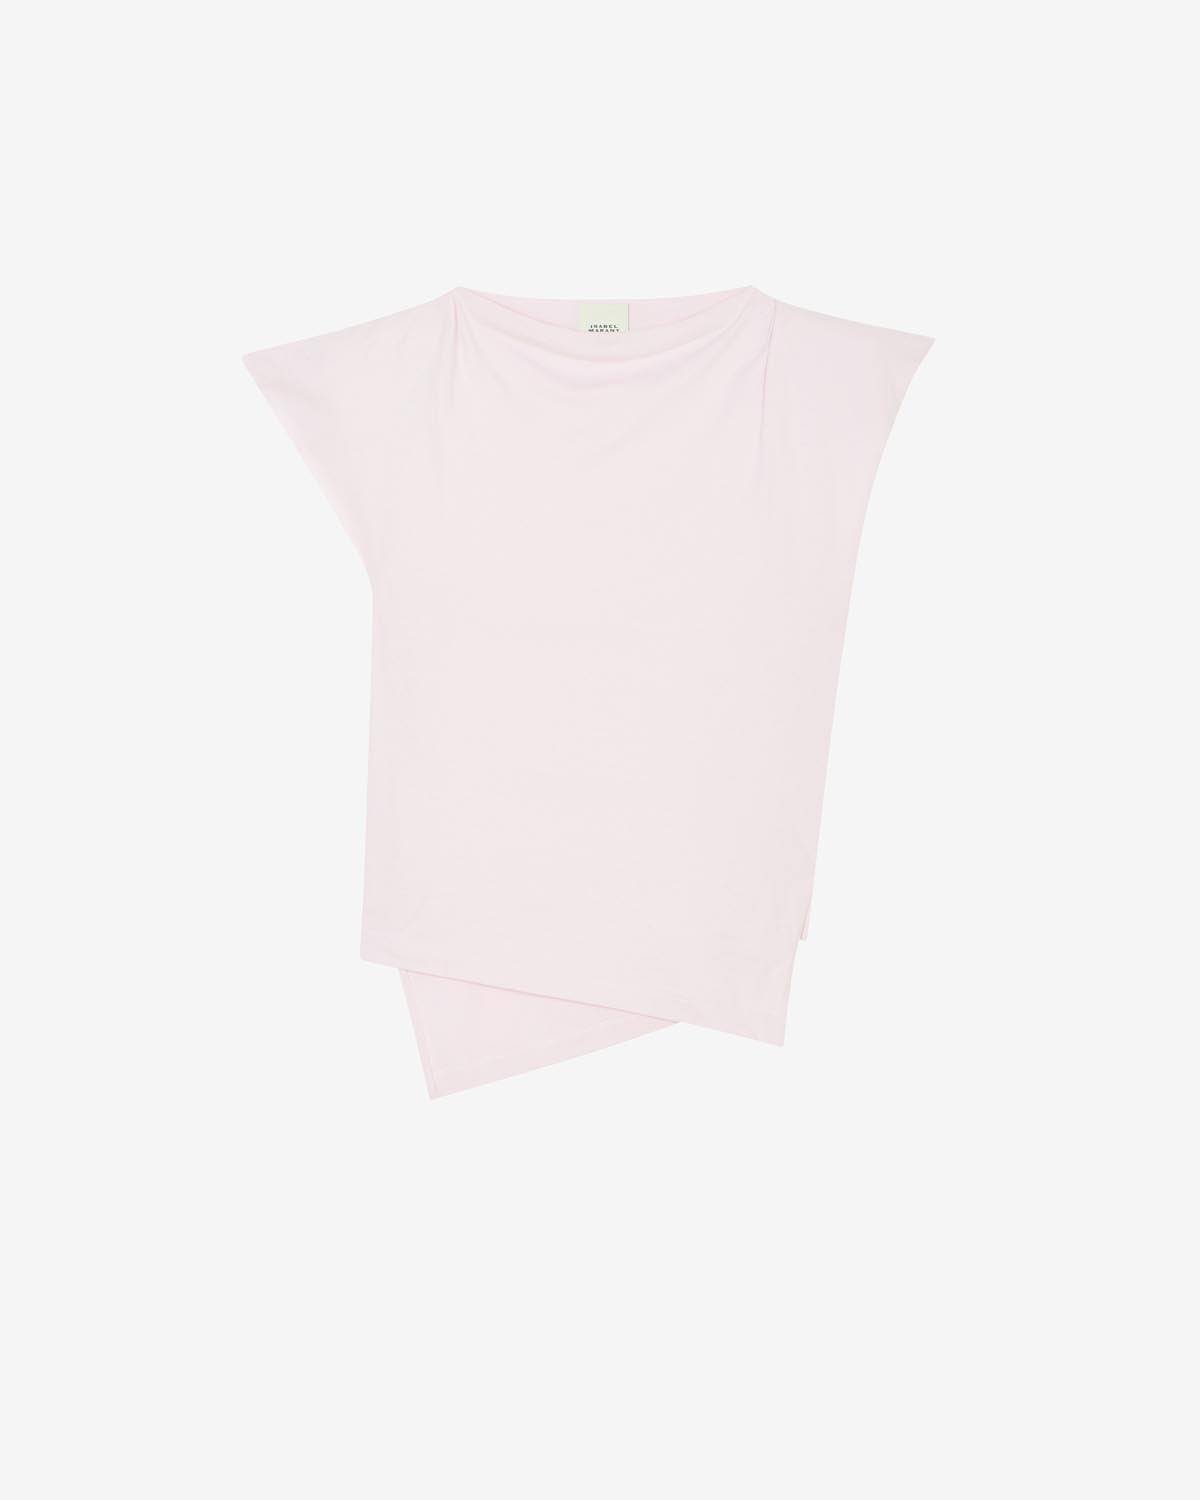 Sebani tee-shirt Woman Light pink 1